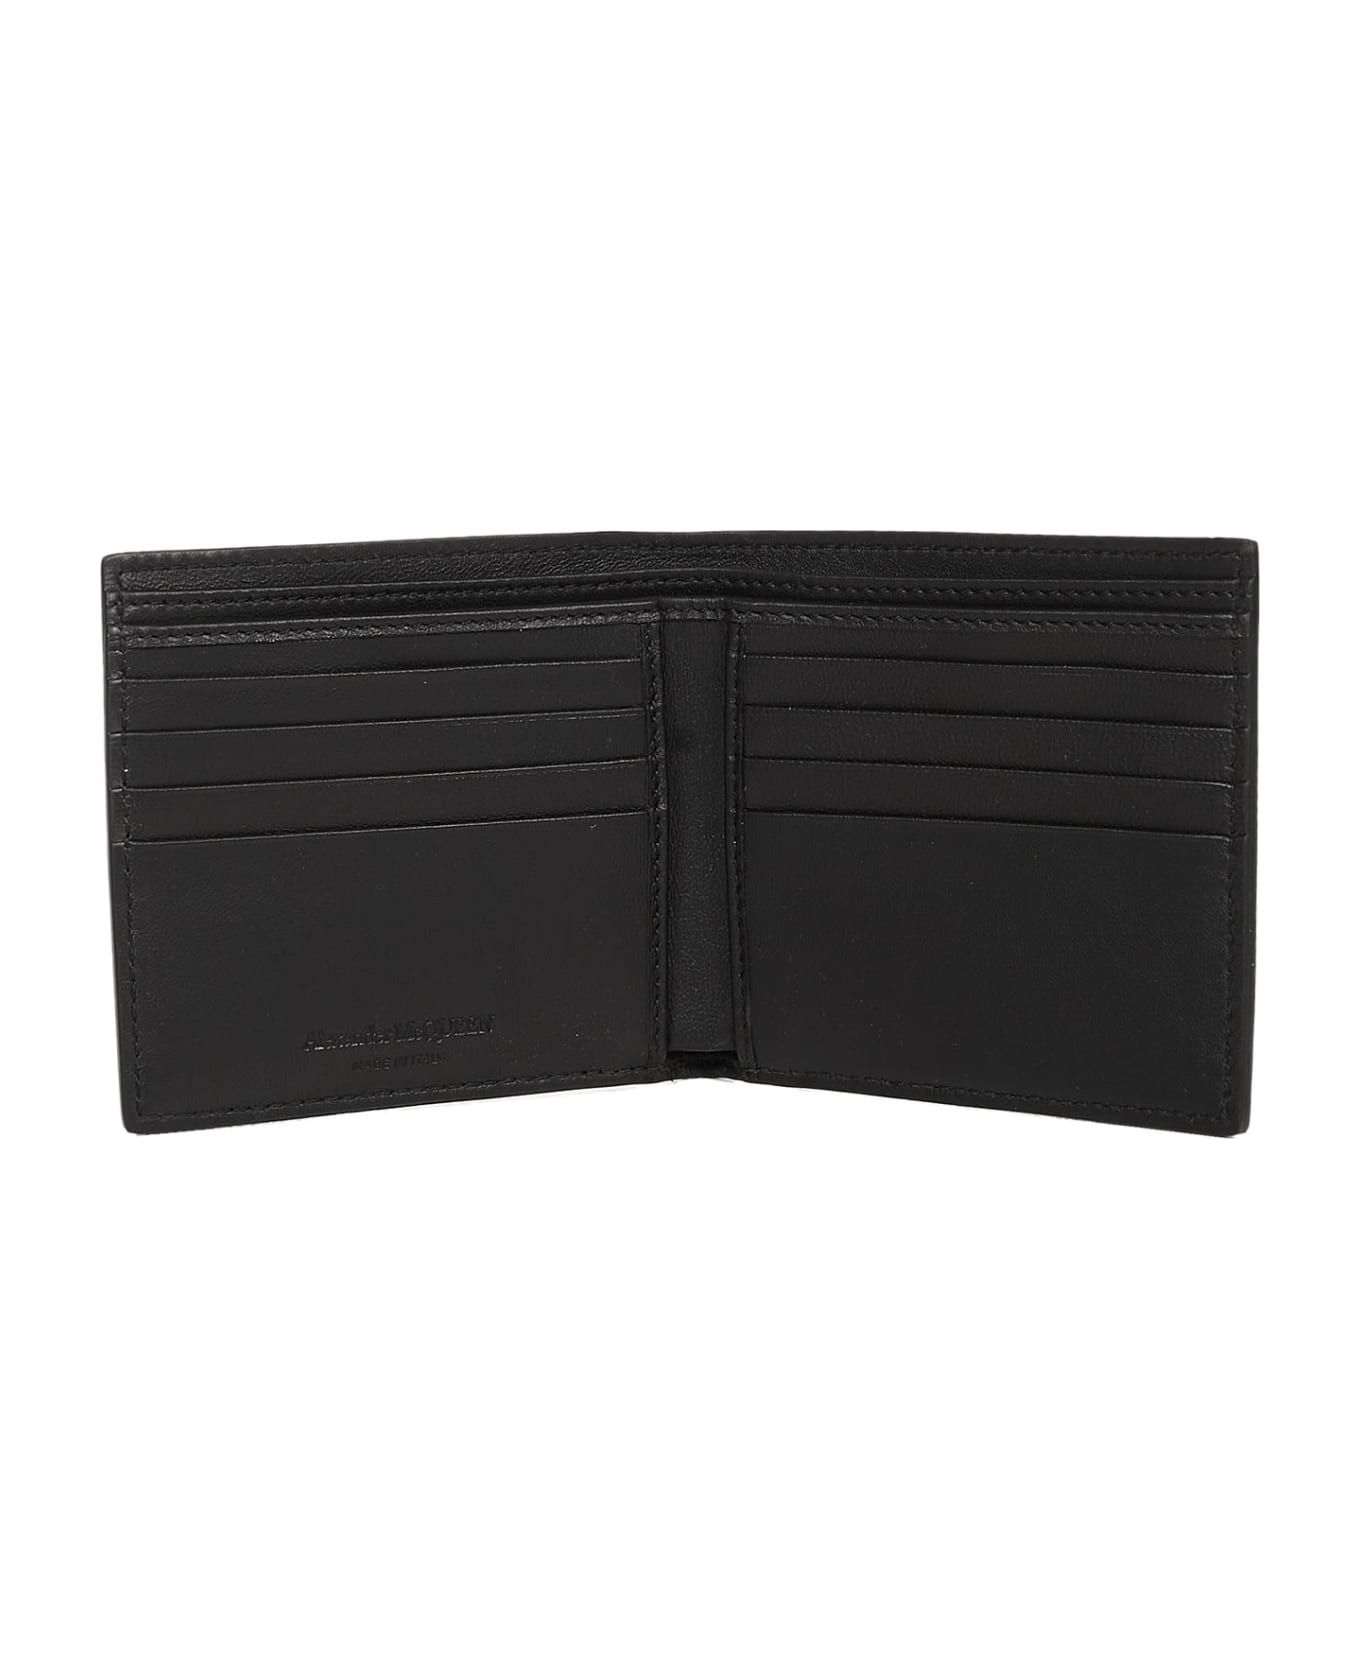 Alexander McQueen Leather Billfold Wallet - Black